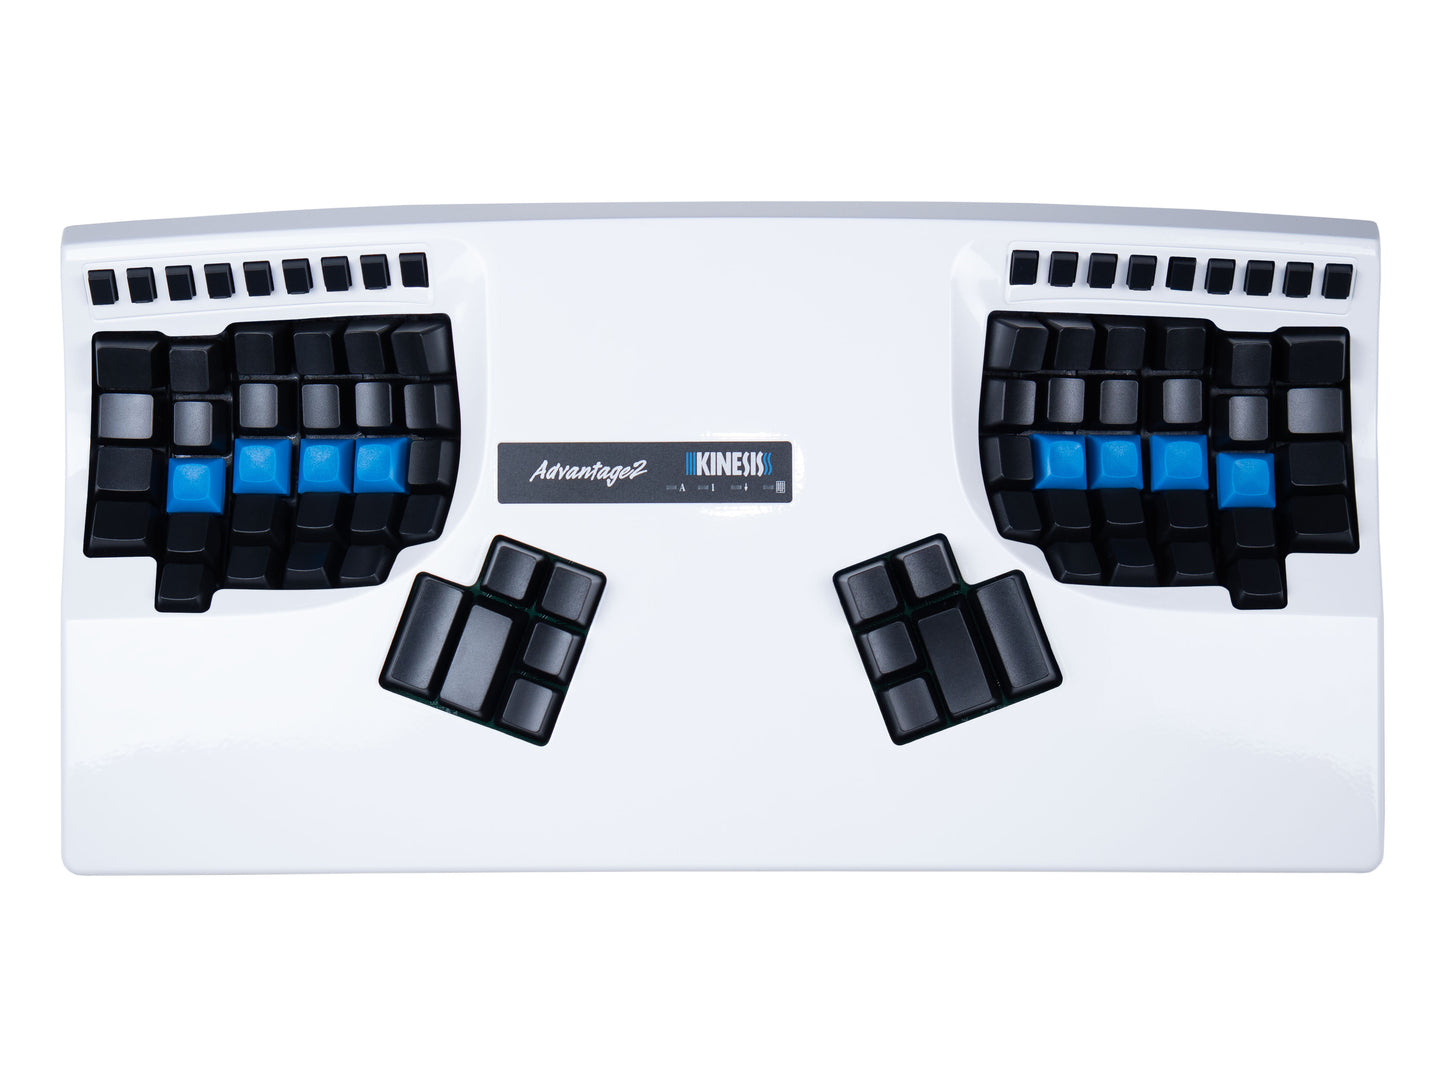 Advantage360 Sound Profiling - Case foam or Deadening – Upgrade Keyboards